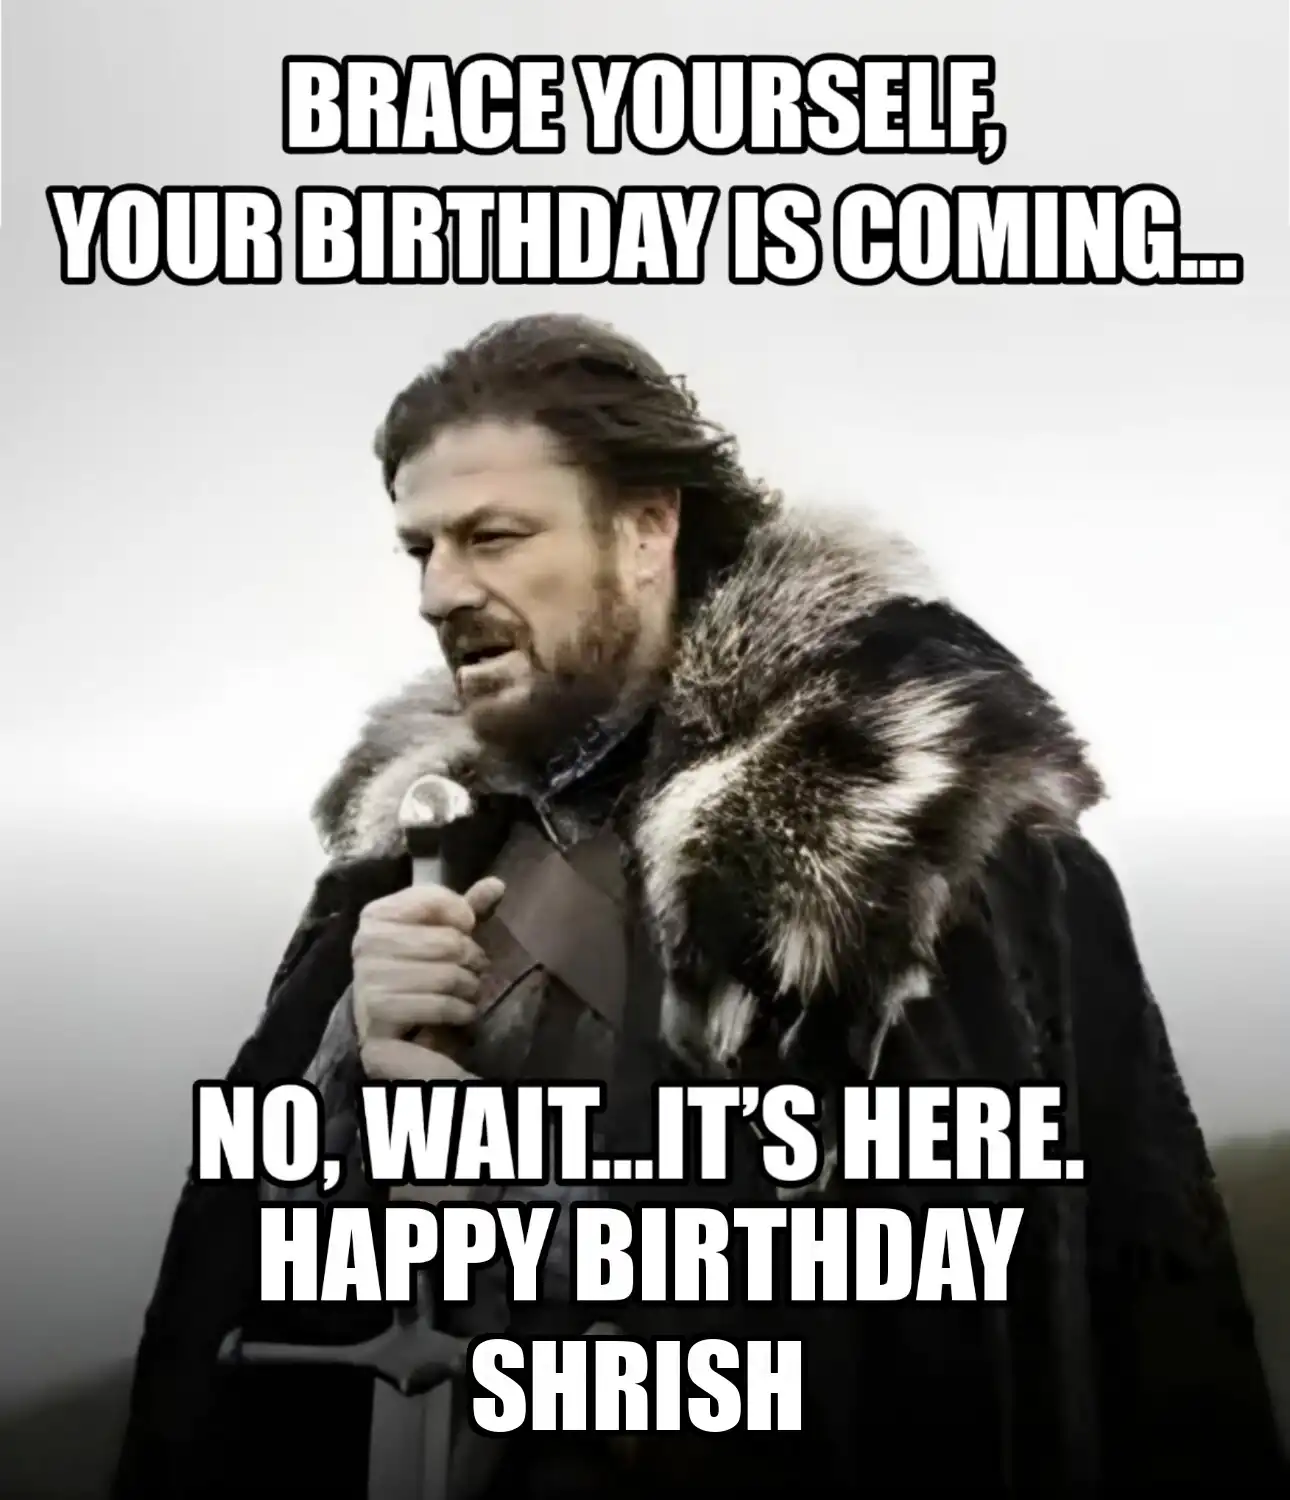 Happy Birthday Shrish Brace Yourself Your Birthday Is Coming Meme